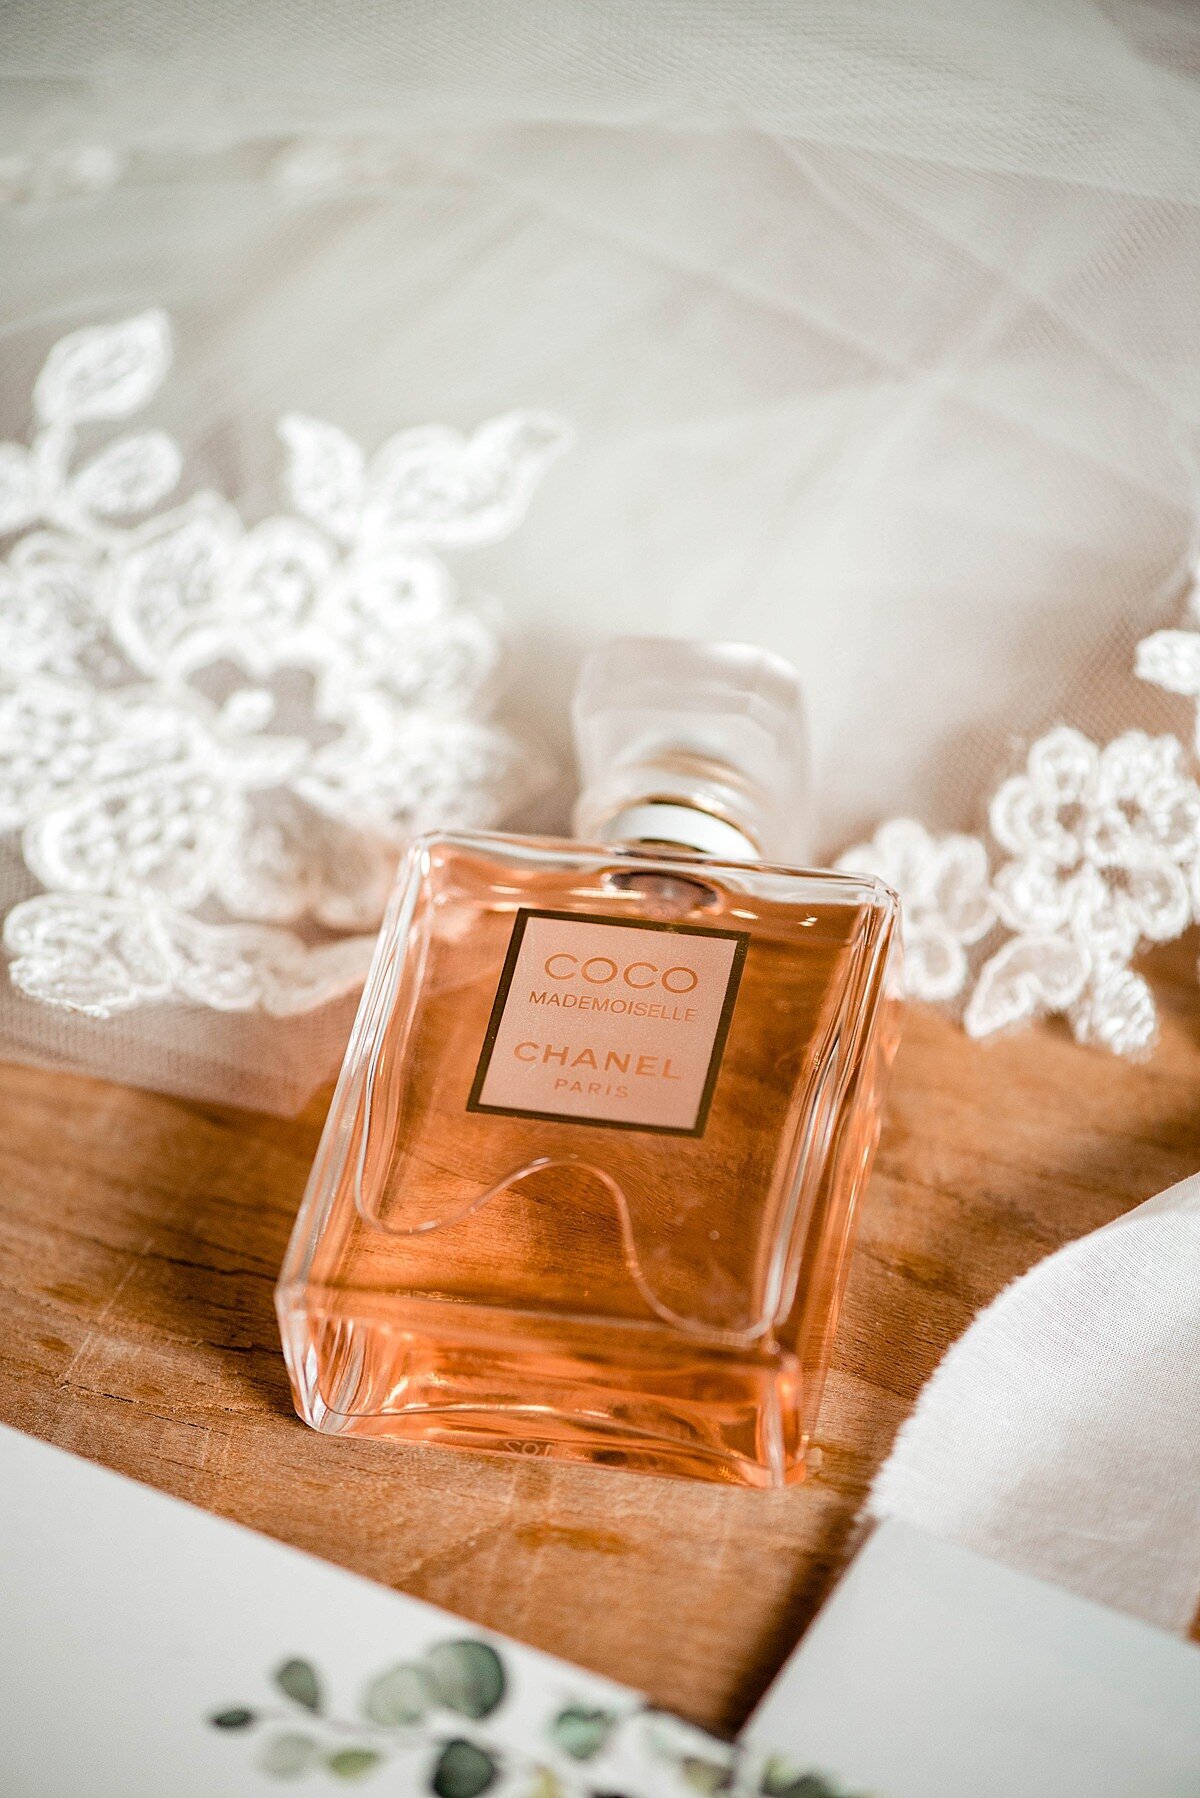 Detail photo of Coco Chanel Perfume bottle alongside wedding veil